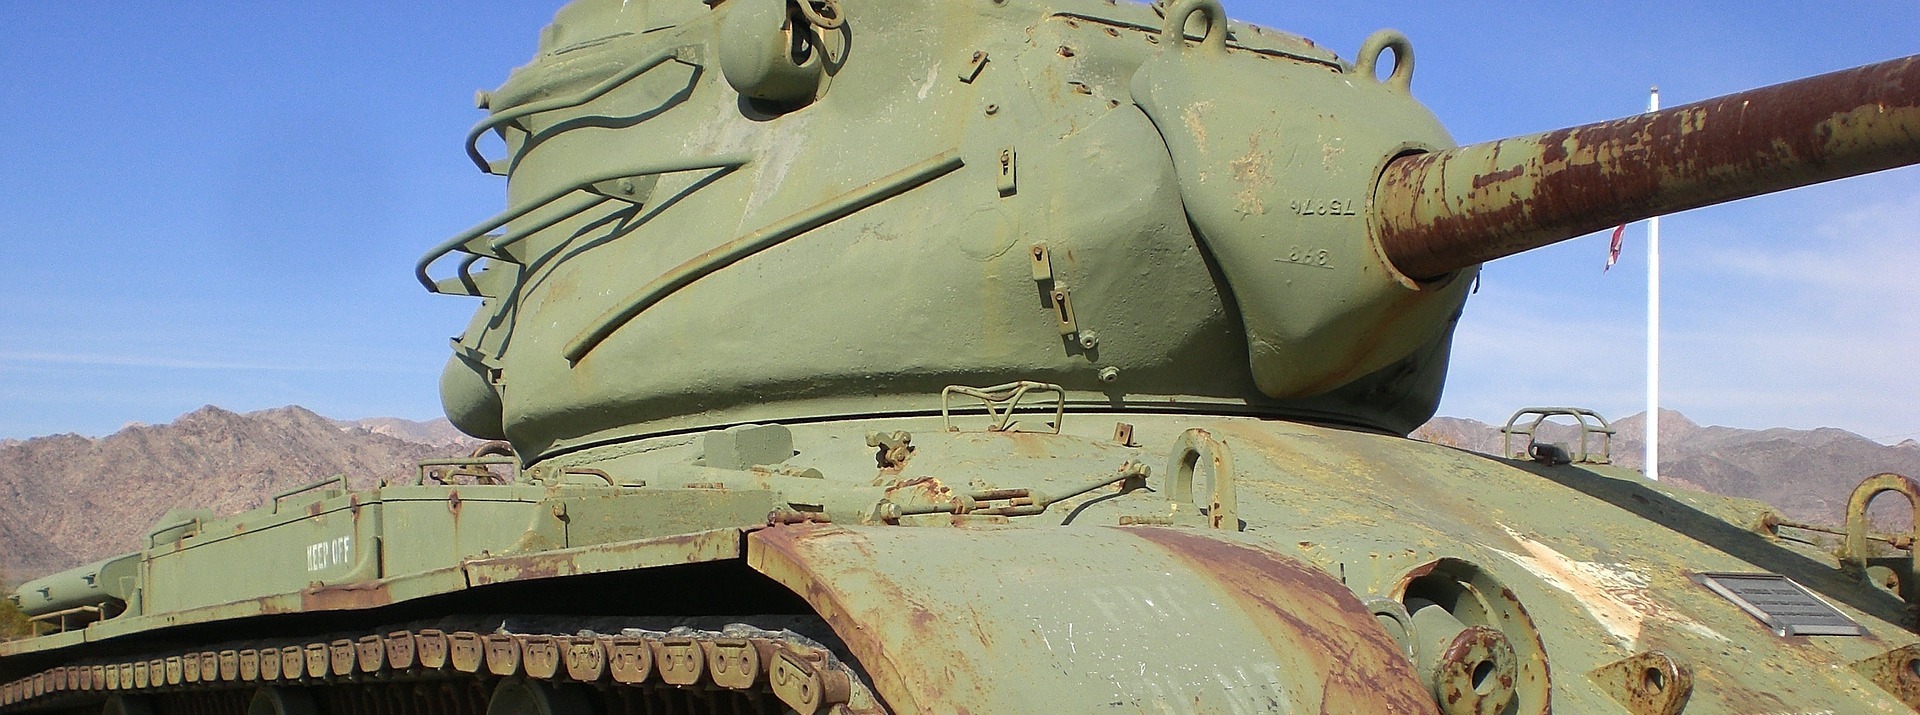 Patton tank 360919 1920